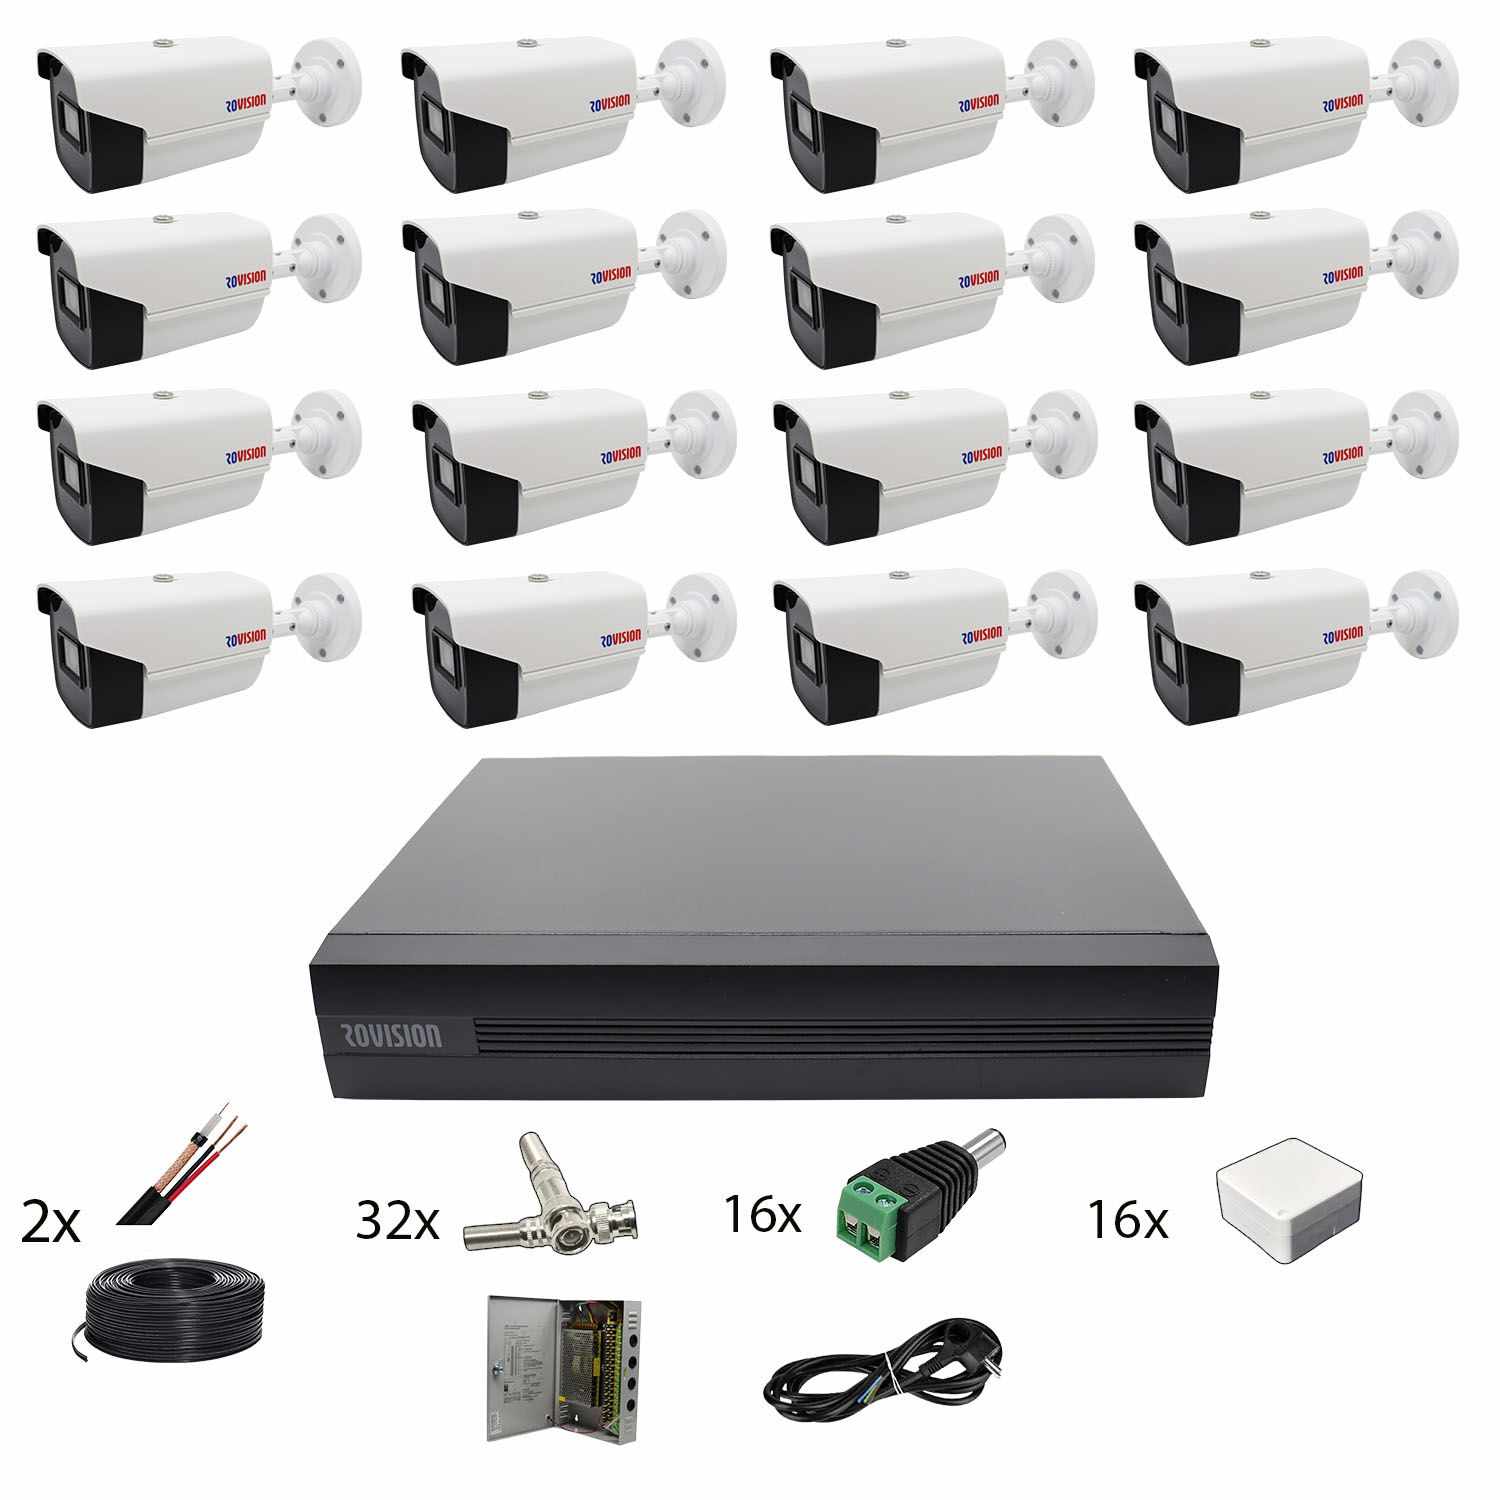 Sistem supraveghere 16 camere Rovision oem Hikvision, 2MP, full hd, IR40M, DVR Pentabrid 16 canale, accesorii incluse